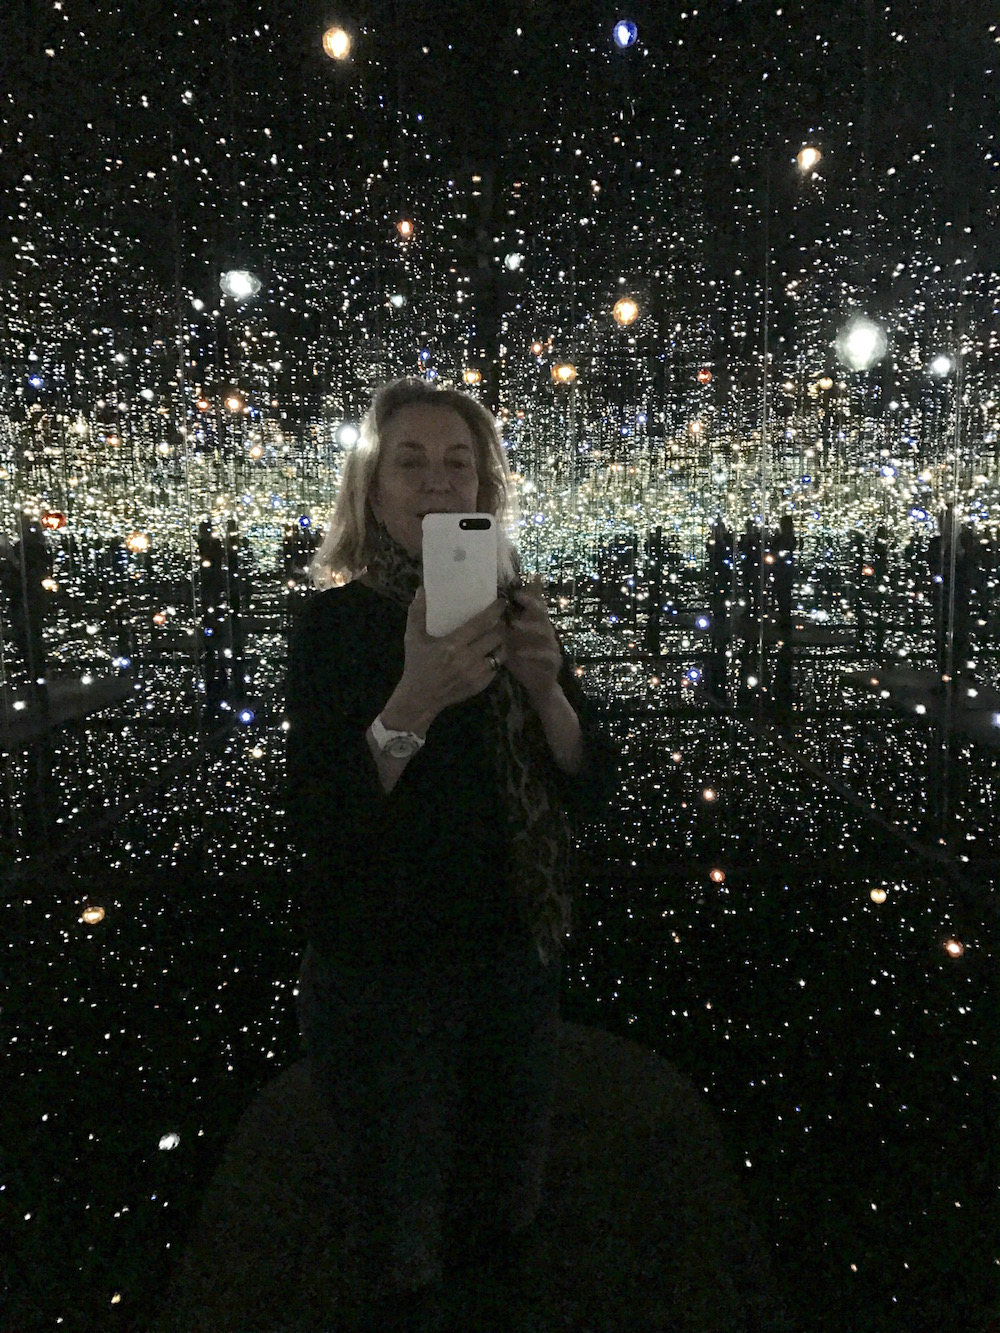 Infinity Room via Susan Rockefeller